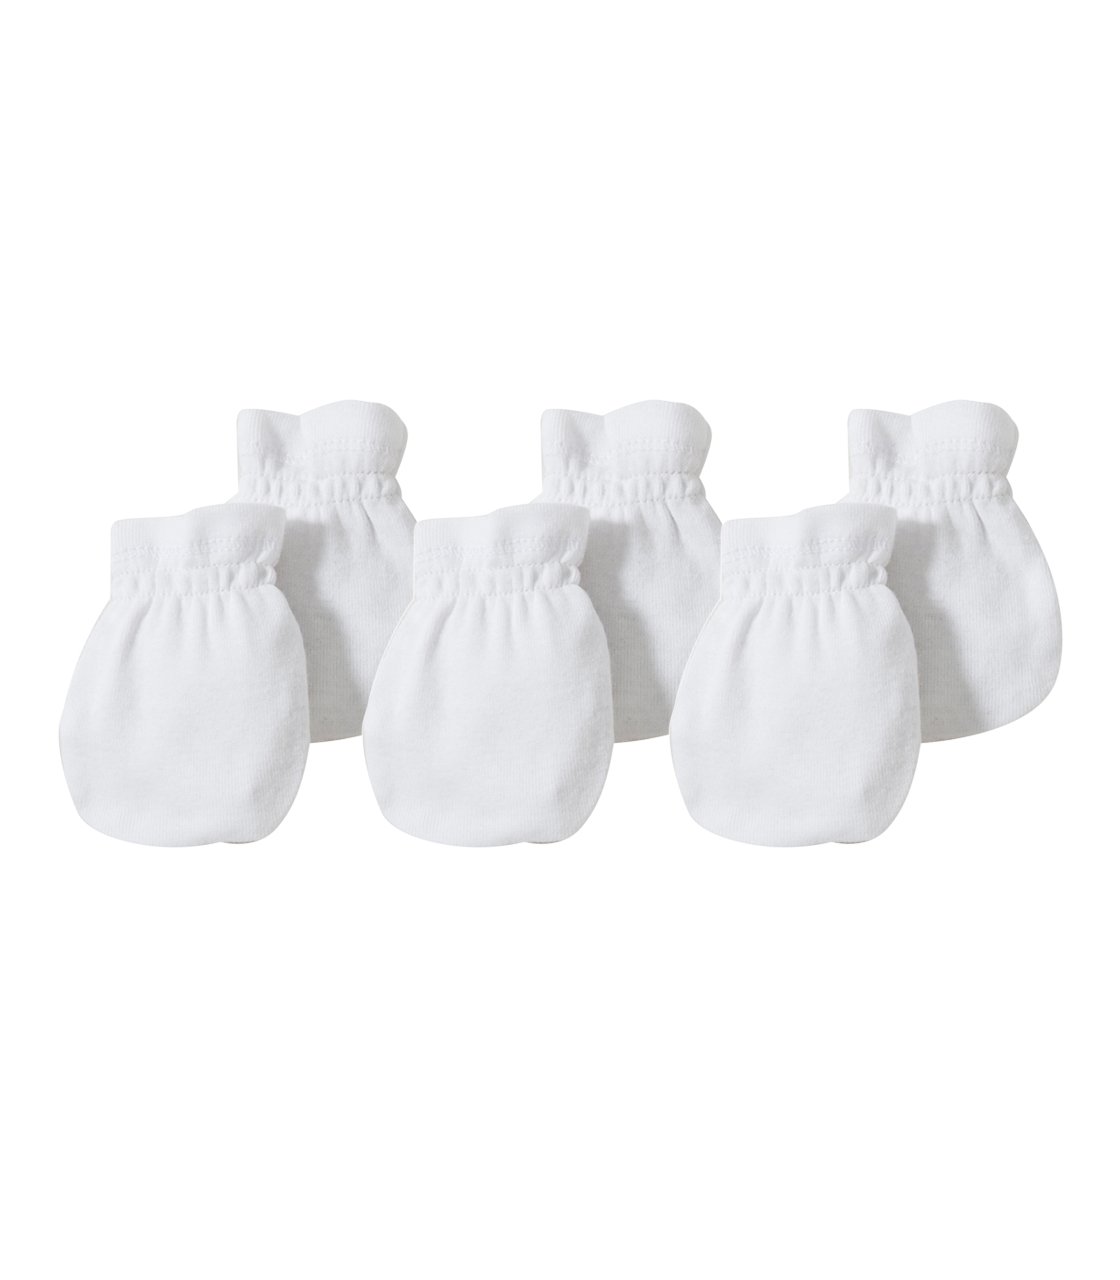 Burt's Bees Baby Unisex Baby Mittens, No-scratch Mitts, 100% Organic Cotton, Set of 3 Gloves